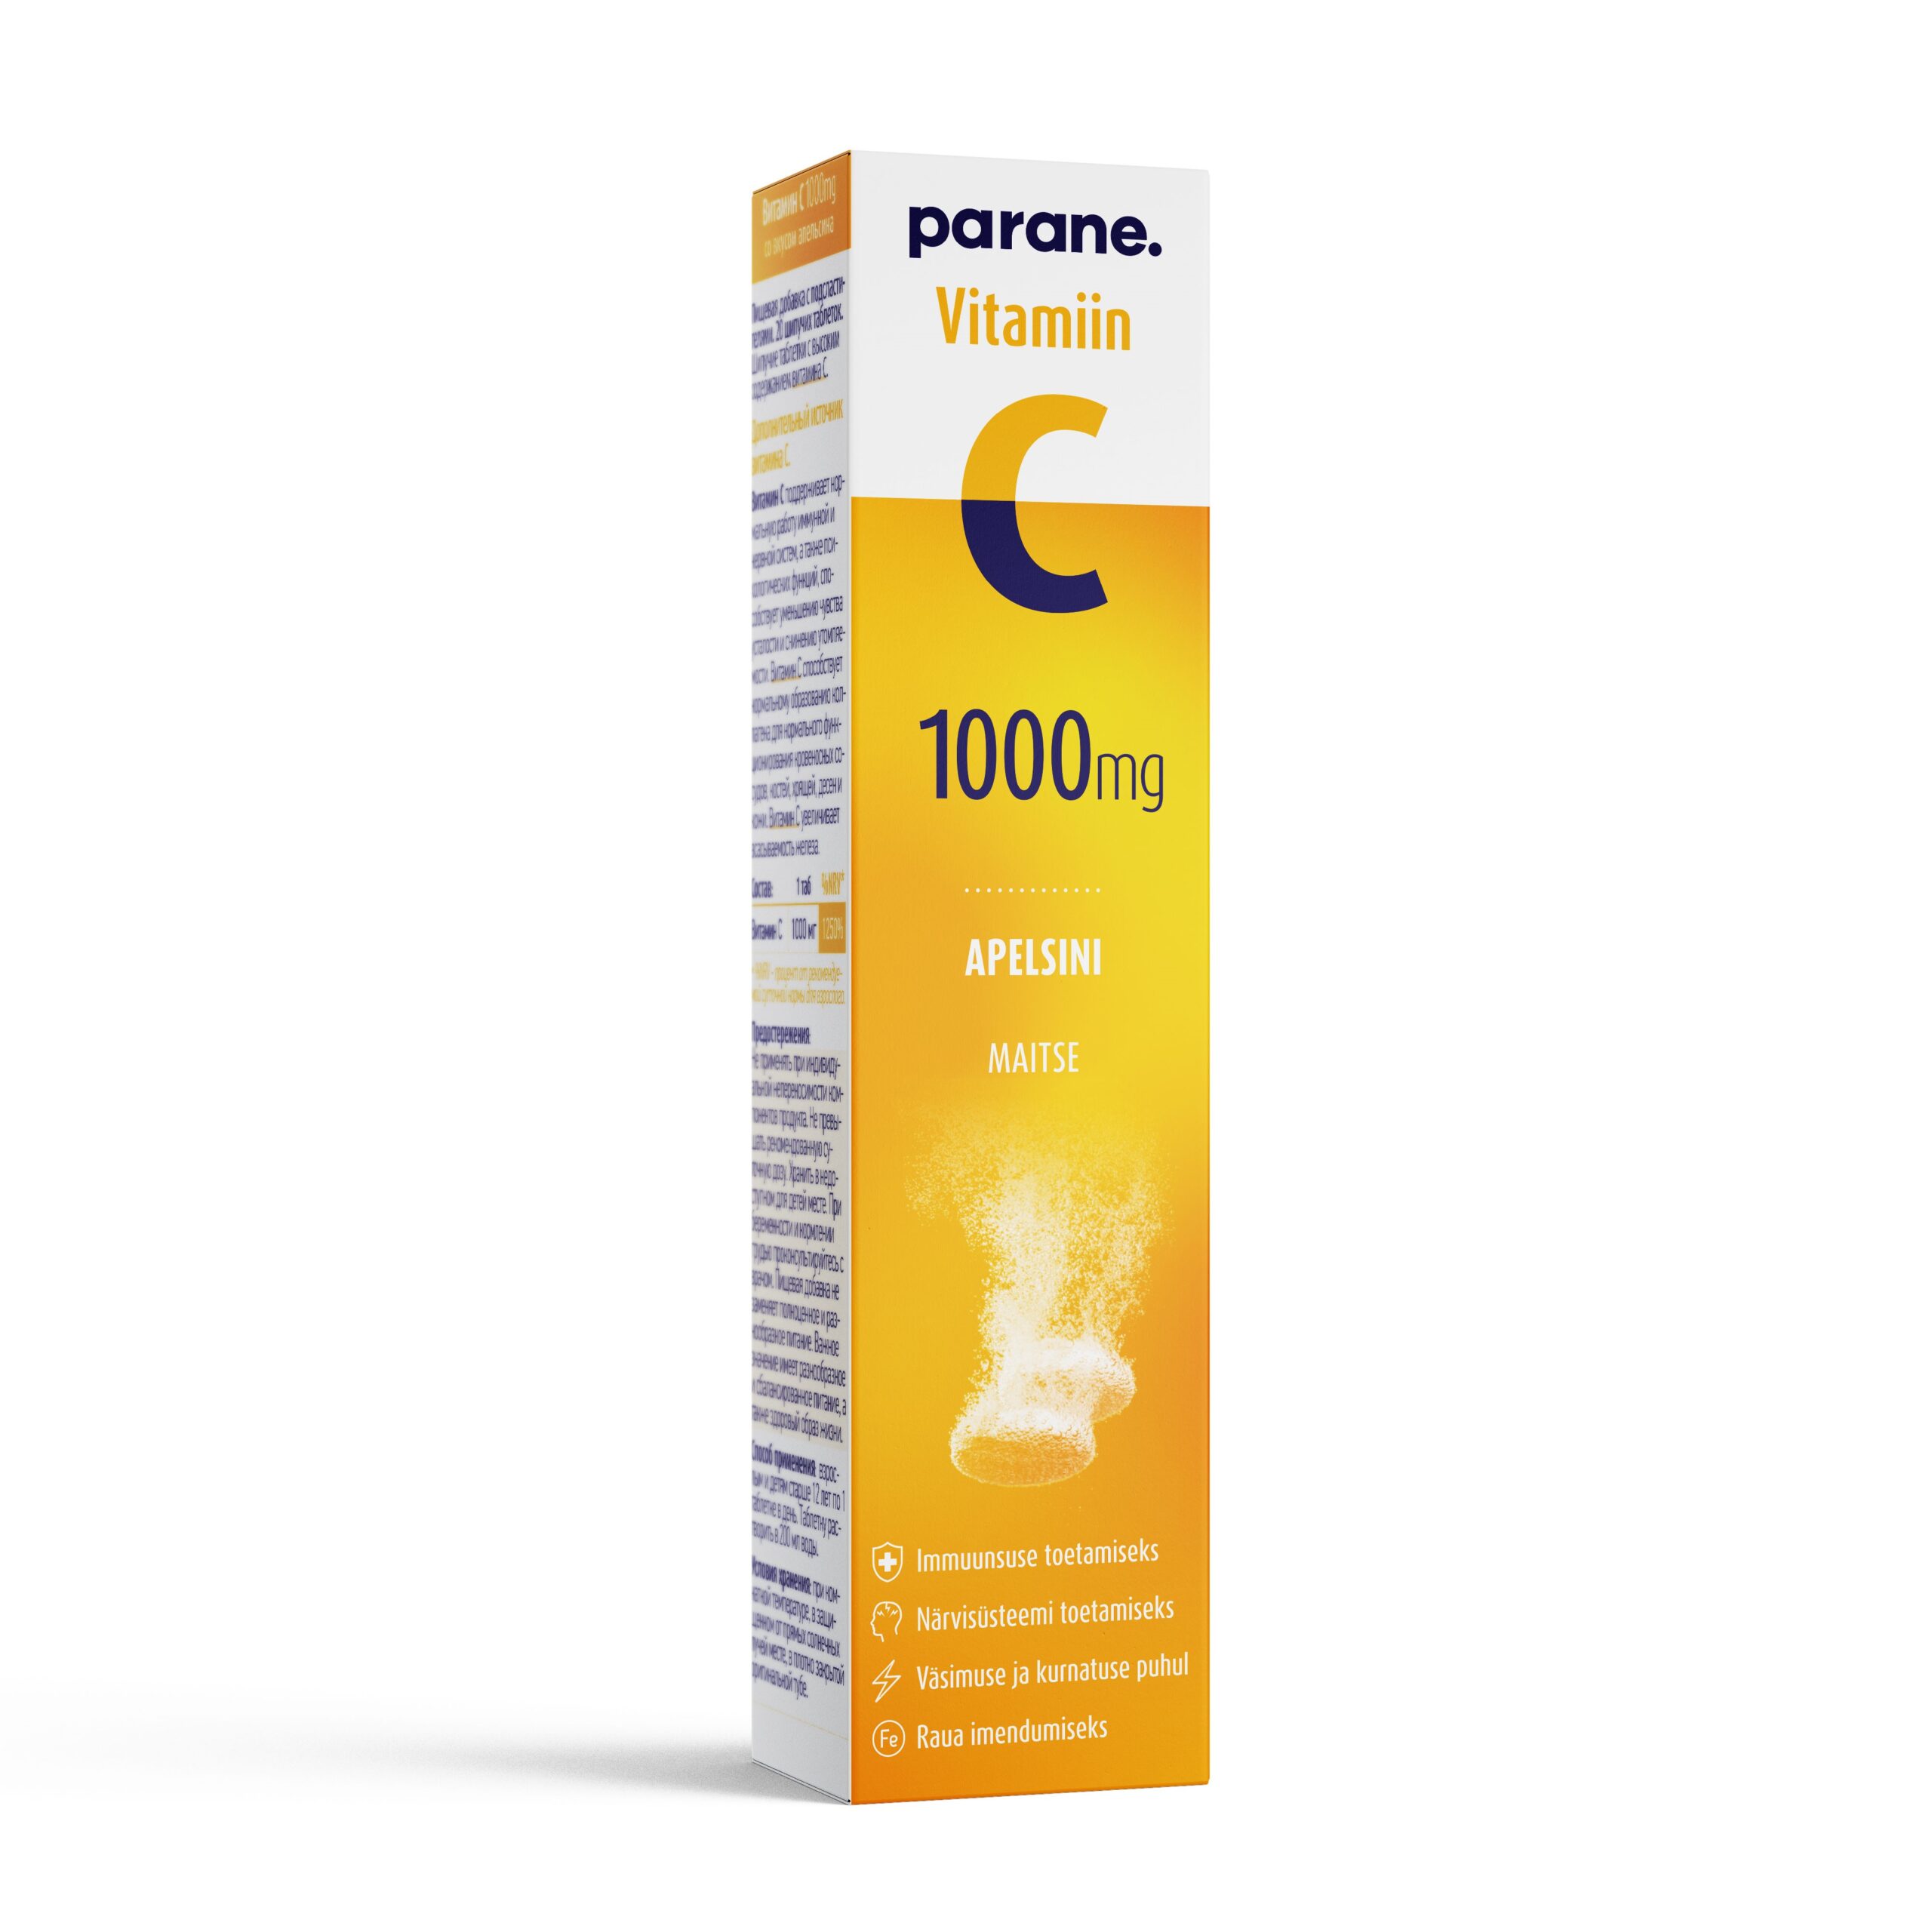 Parane. vitamiinC N20 box